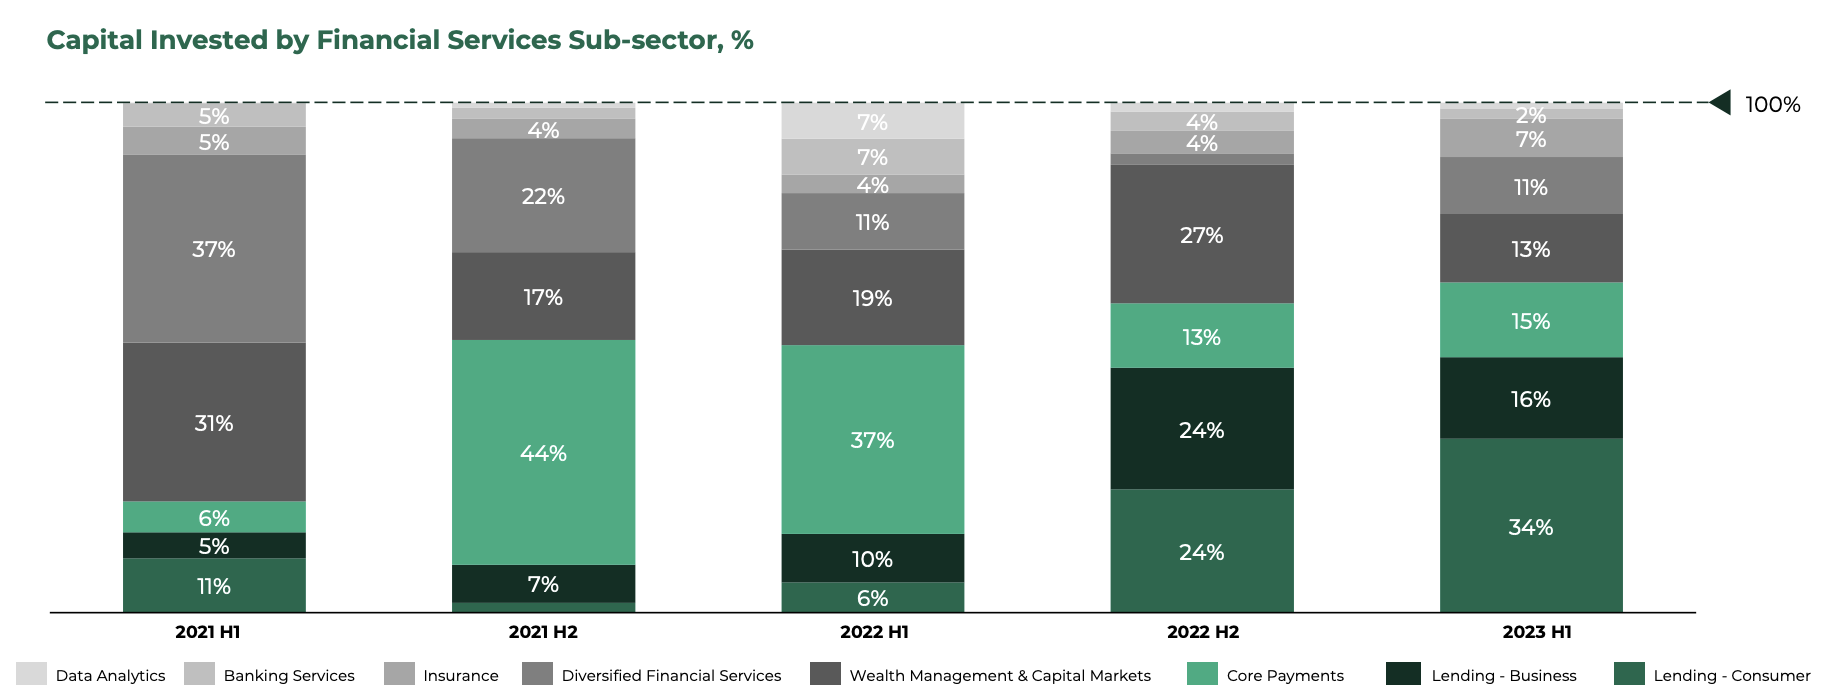 Capital invertido por subsector de servicios financieros, %, Fuente: Southeast Asia Tech Investment 2023 H1, Cento Ventures, diciembre de 2023